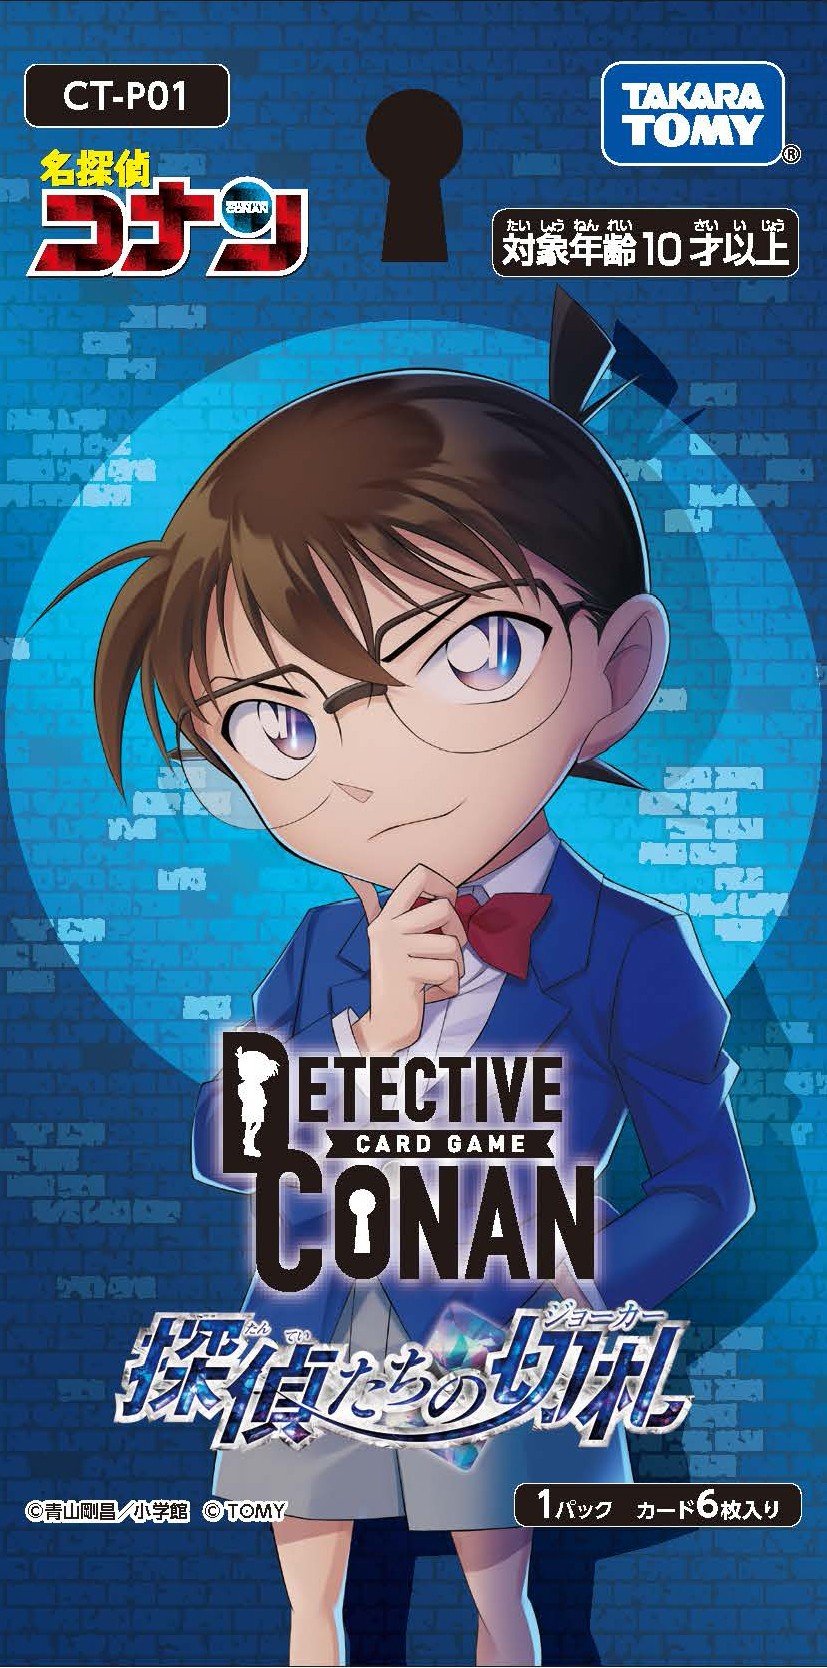 DETECTIVE CONAN CT-D01 名探偵コナンTCG トレーディングカード Case ...